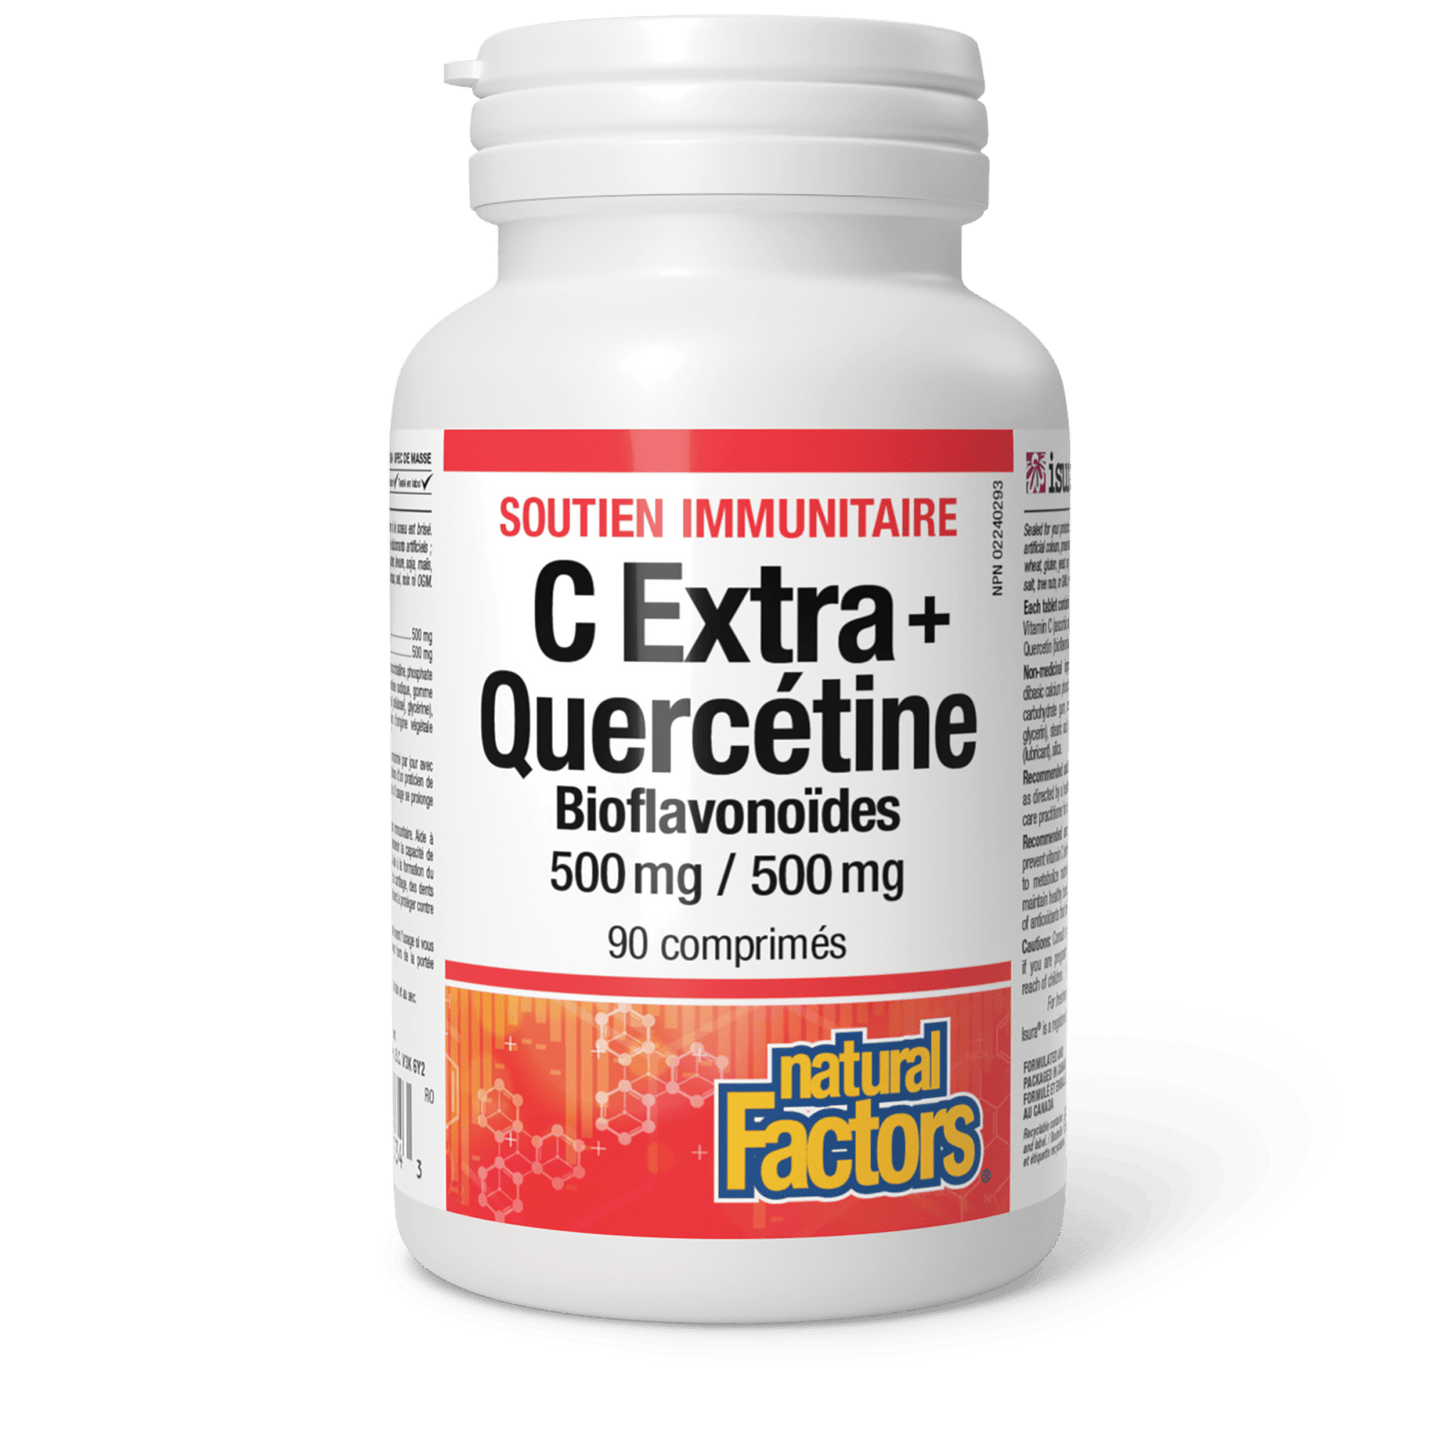 C Extra+ Quercétine Bioflavonoïdes 500 mg/500 mg, Natural Factors|v|image|1334